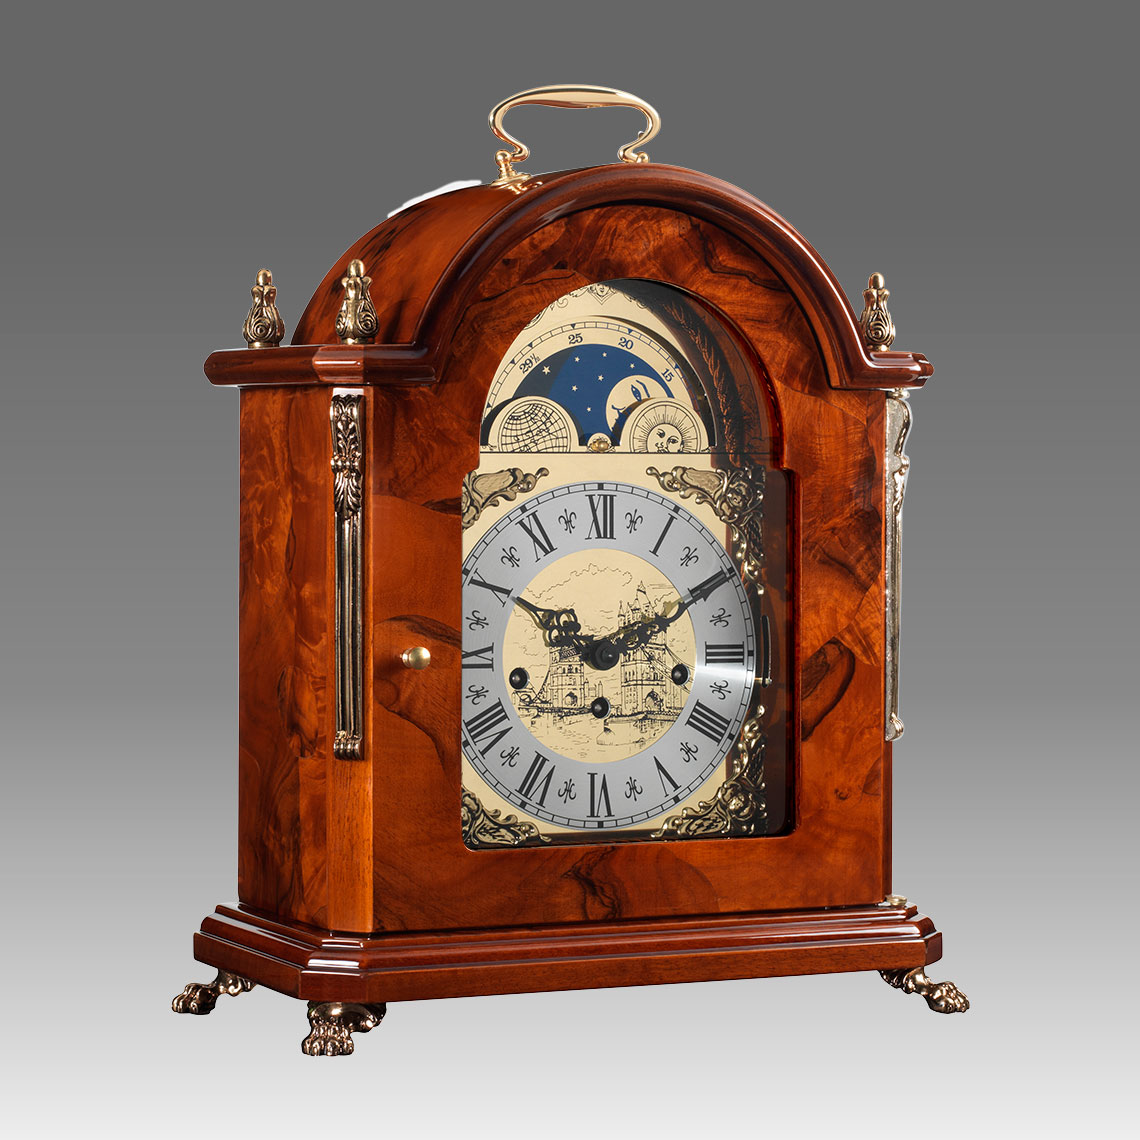 Mante Clock, Table Clock, Cimn Clock, Art.321/5 Briar of Walnut, Burn walnut - Westminster melody on rod gong, moon fase dial